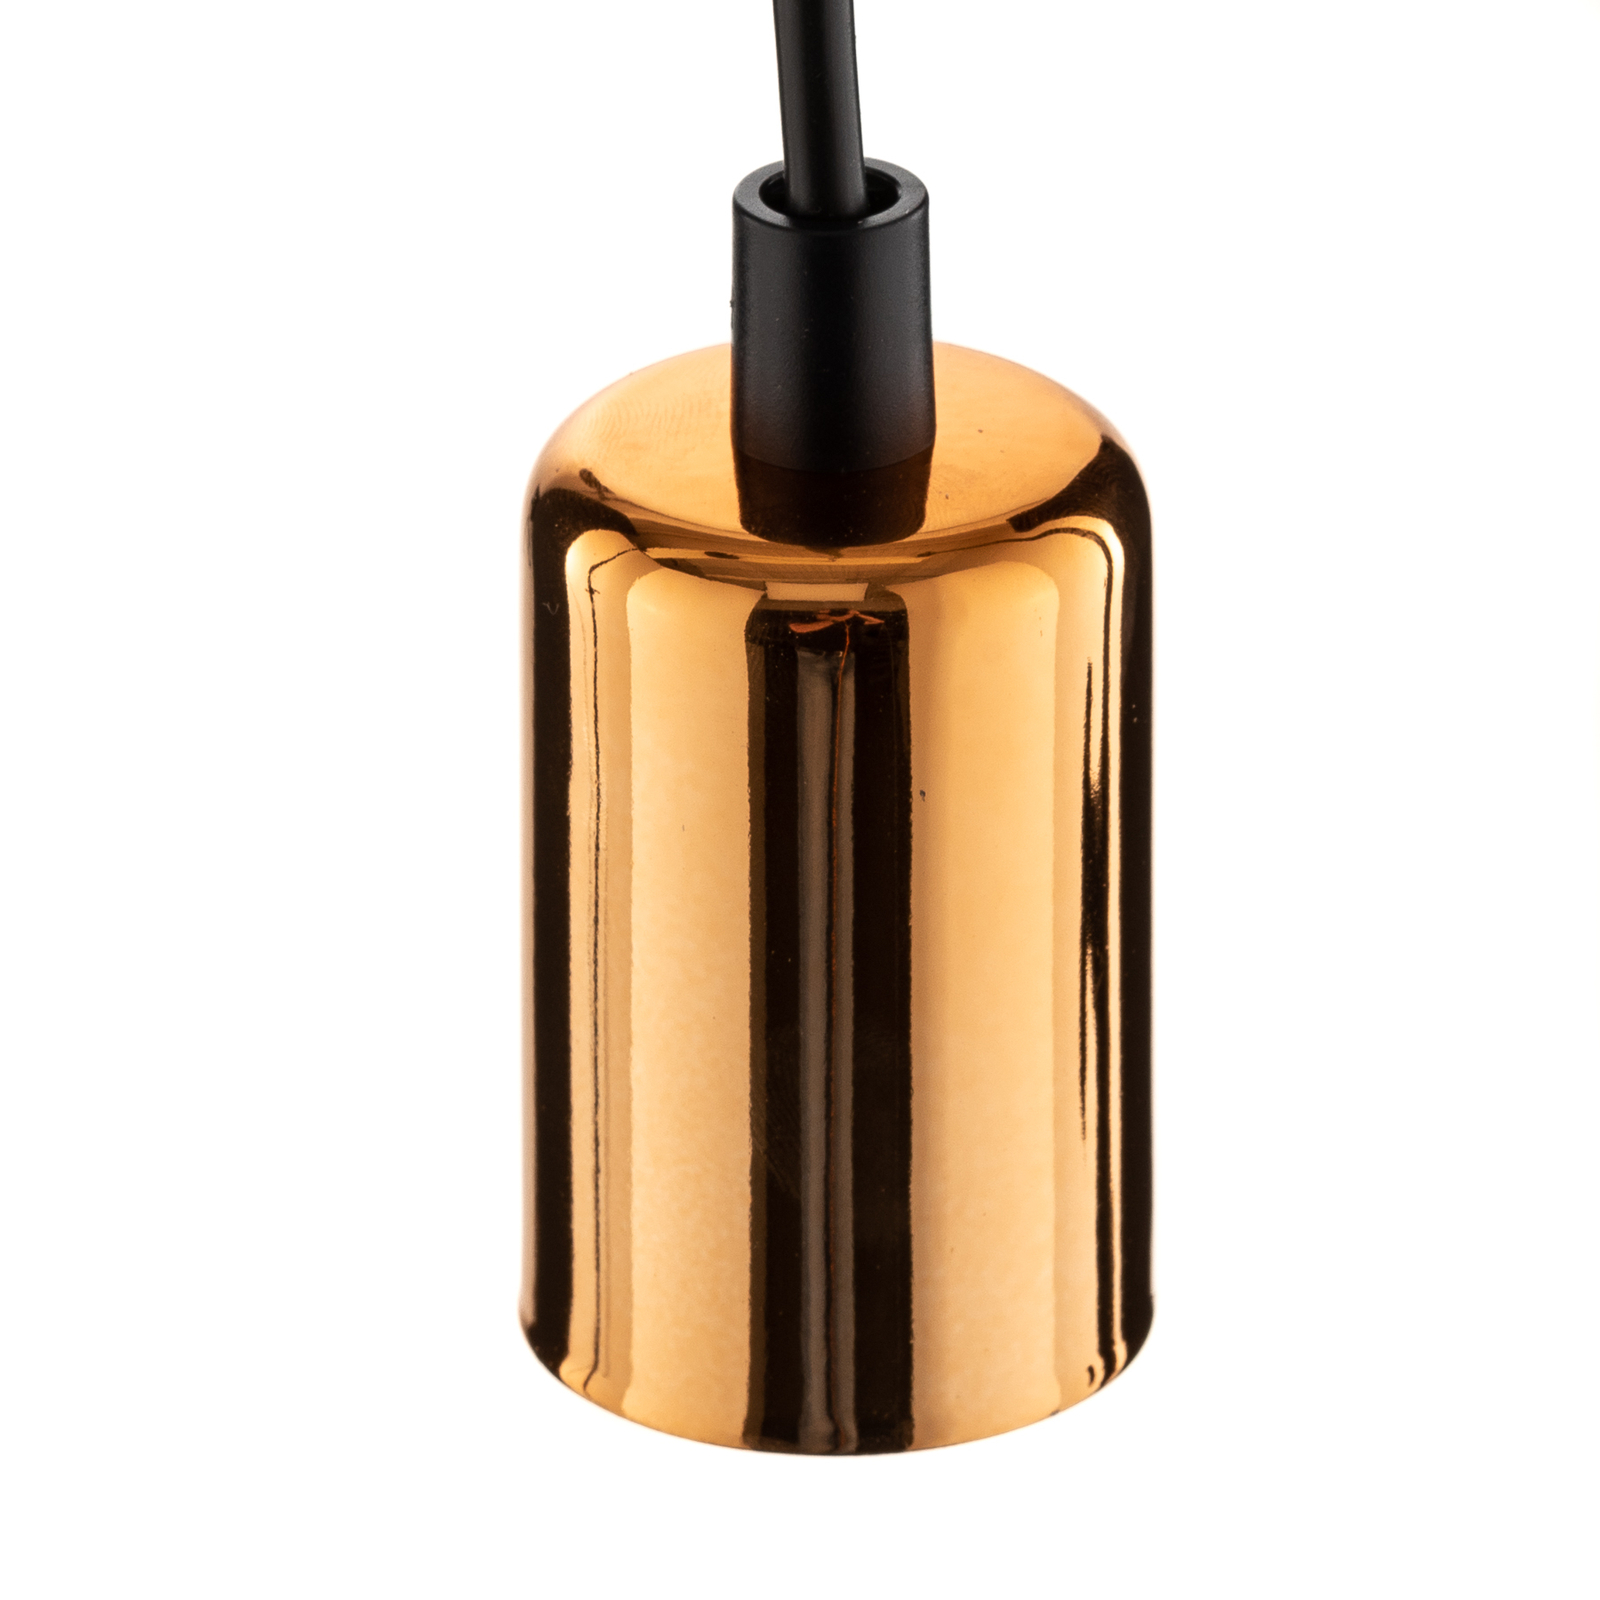 Spark 1 pendant lamp one-bulb, black/copper